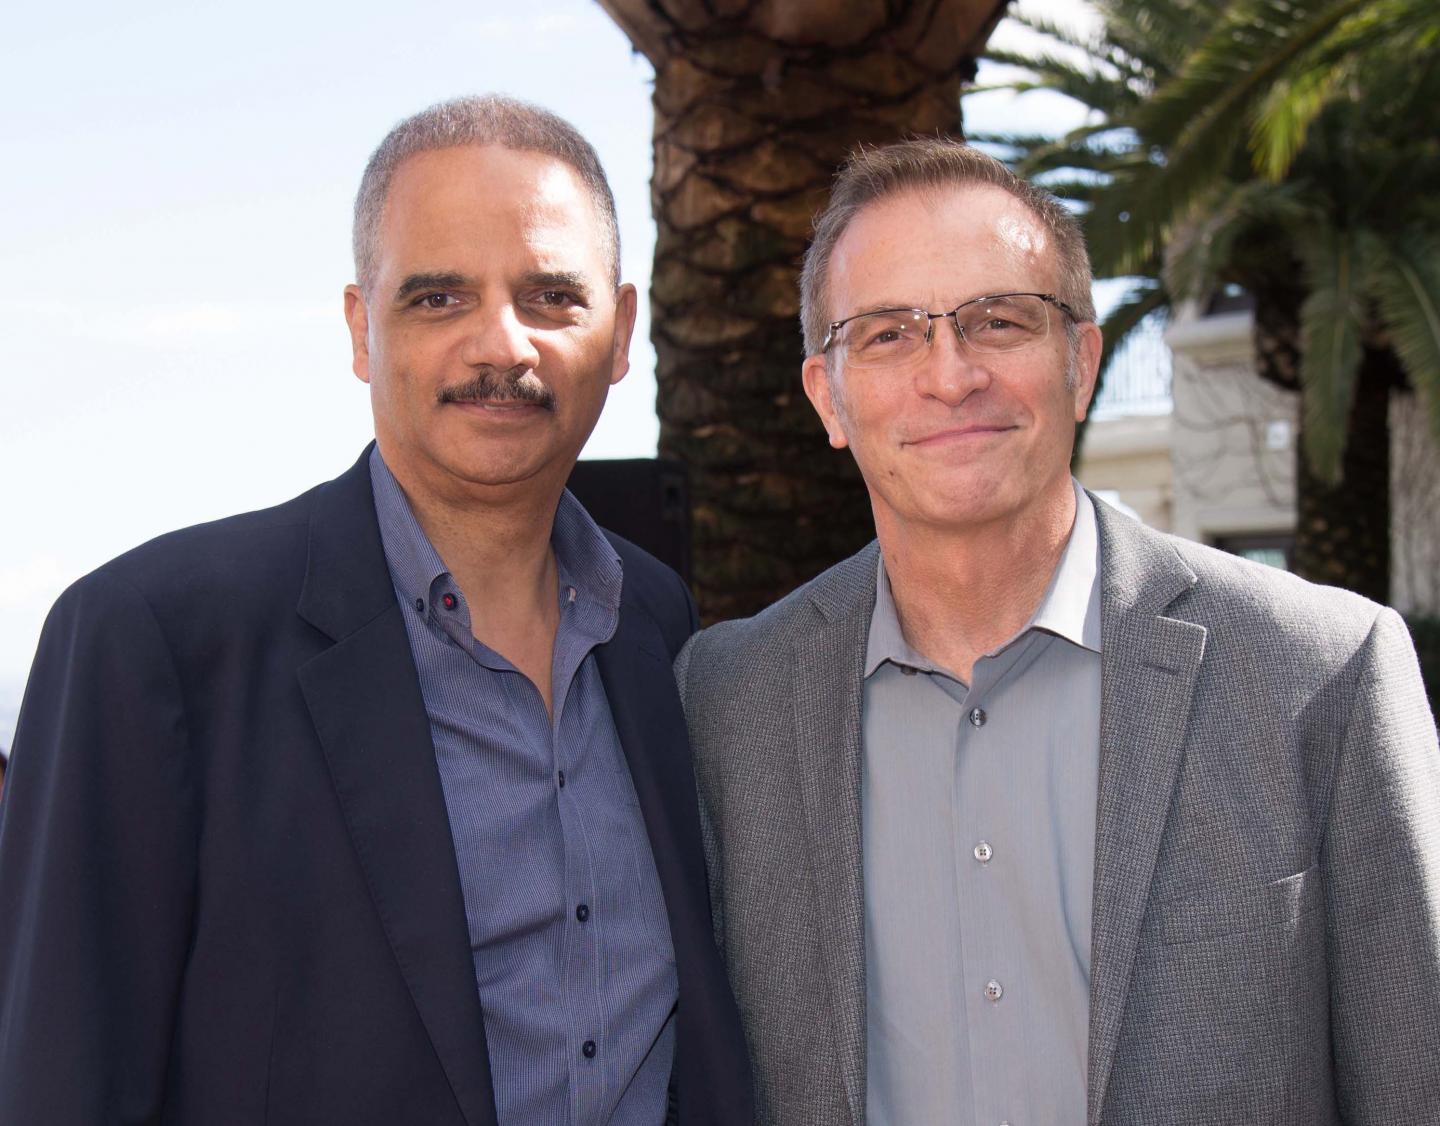 Professor John McWhorter (right) with Dean James Valentini in San Francisco.